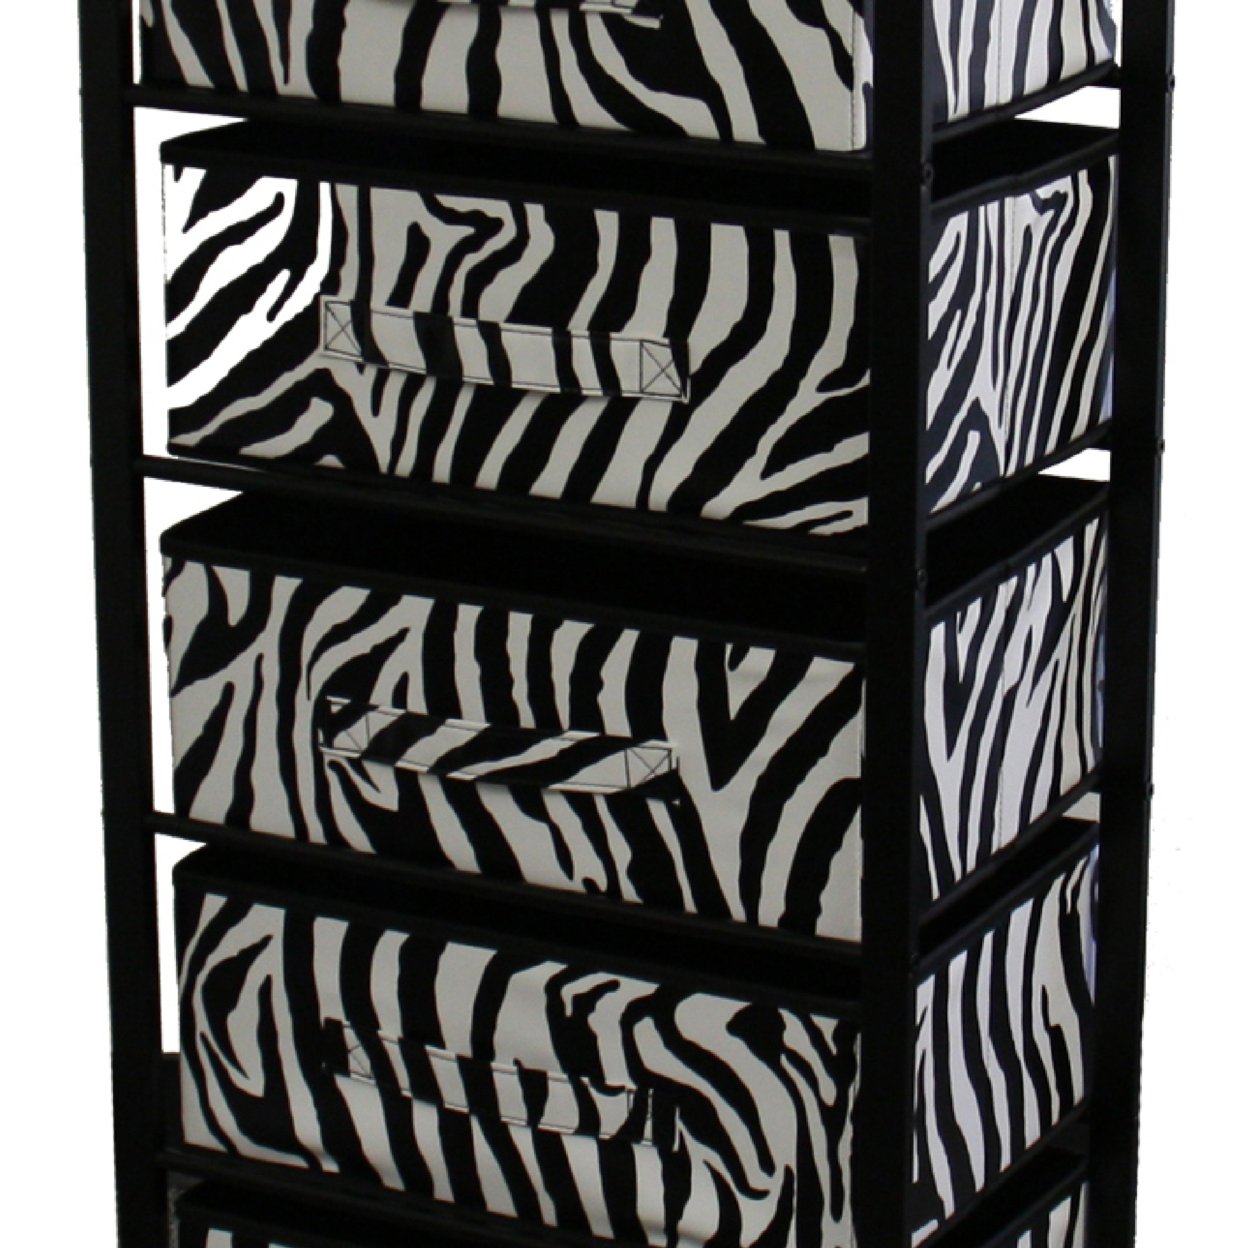 Animal Print Metal Rack With 6 Spacious Drawers, Black And White- Saltoro Sherpi